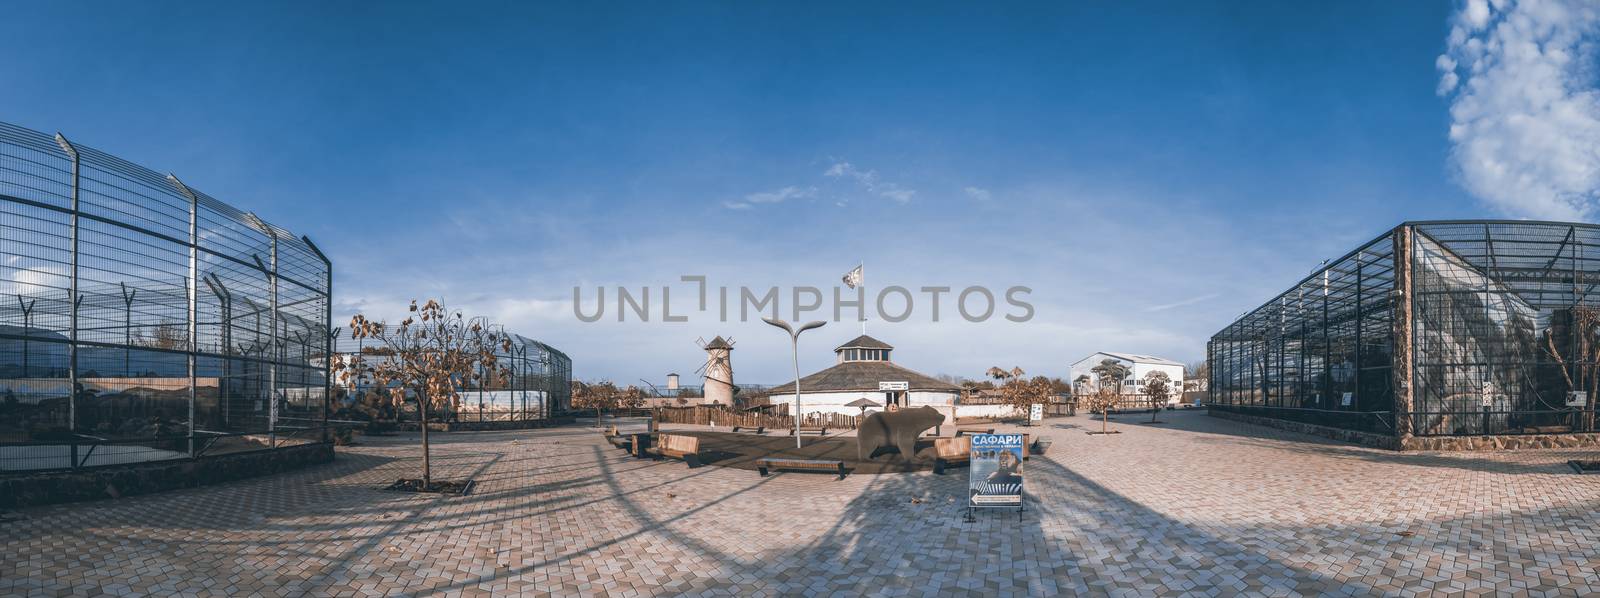 Odessa, Ukraine - 10.20.2018. Panoramic view of biopark and zoo near Odessa, Ukraine in a sunny autumn day